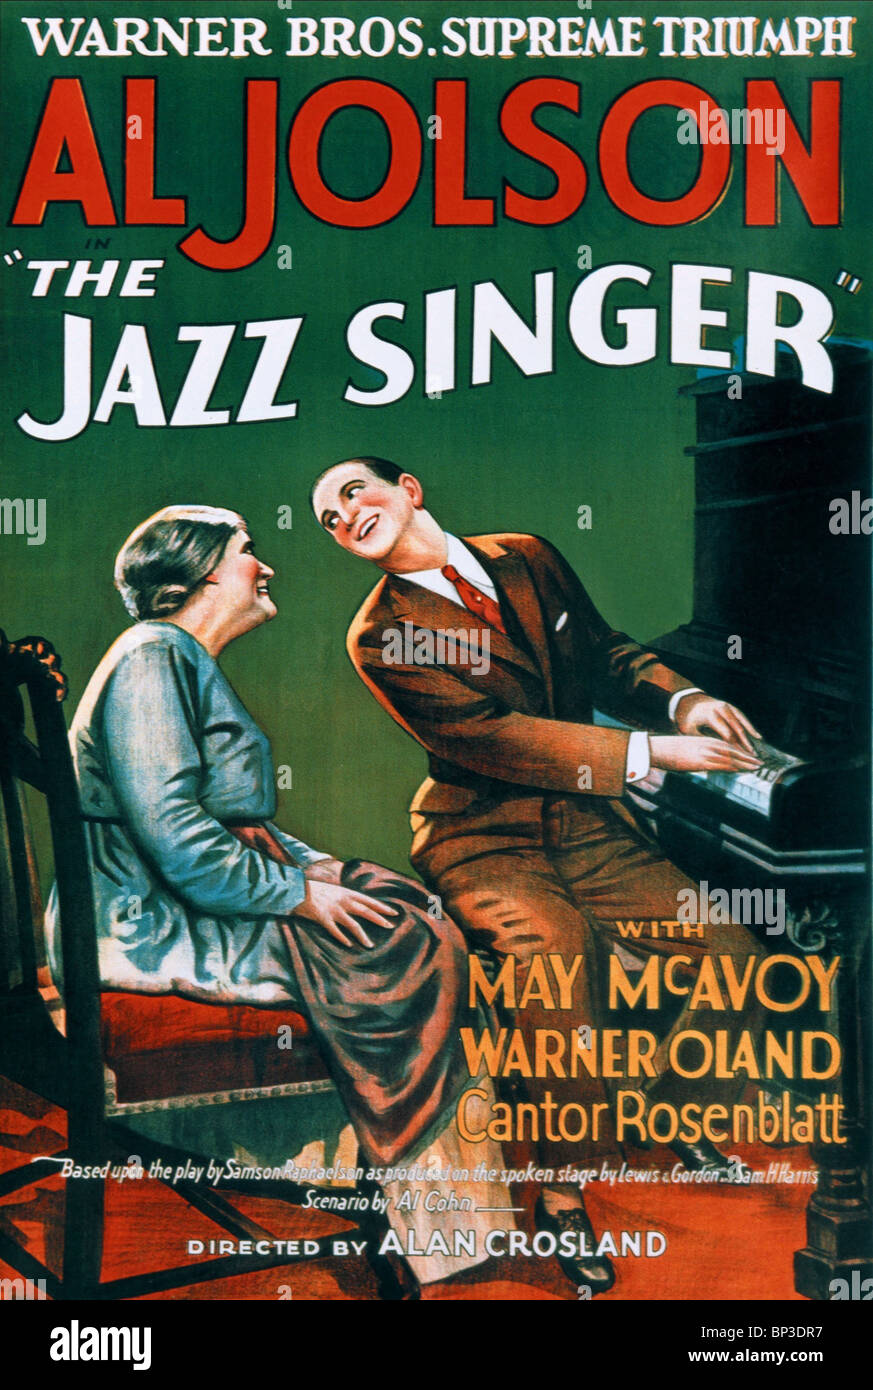 AL JOLSON ON FILM POSTER THE JAZZ SINGER (1927) Stock Photo